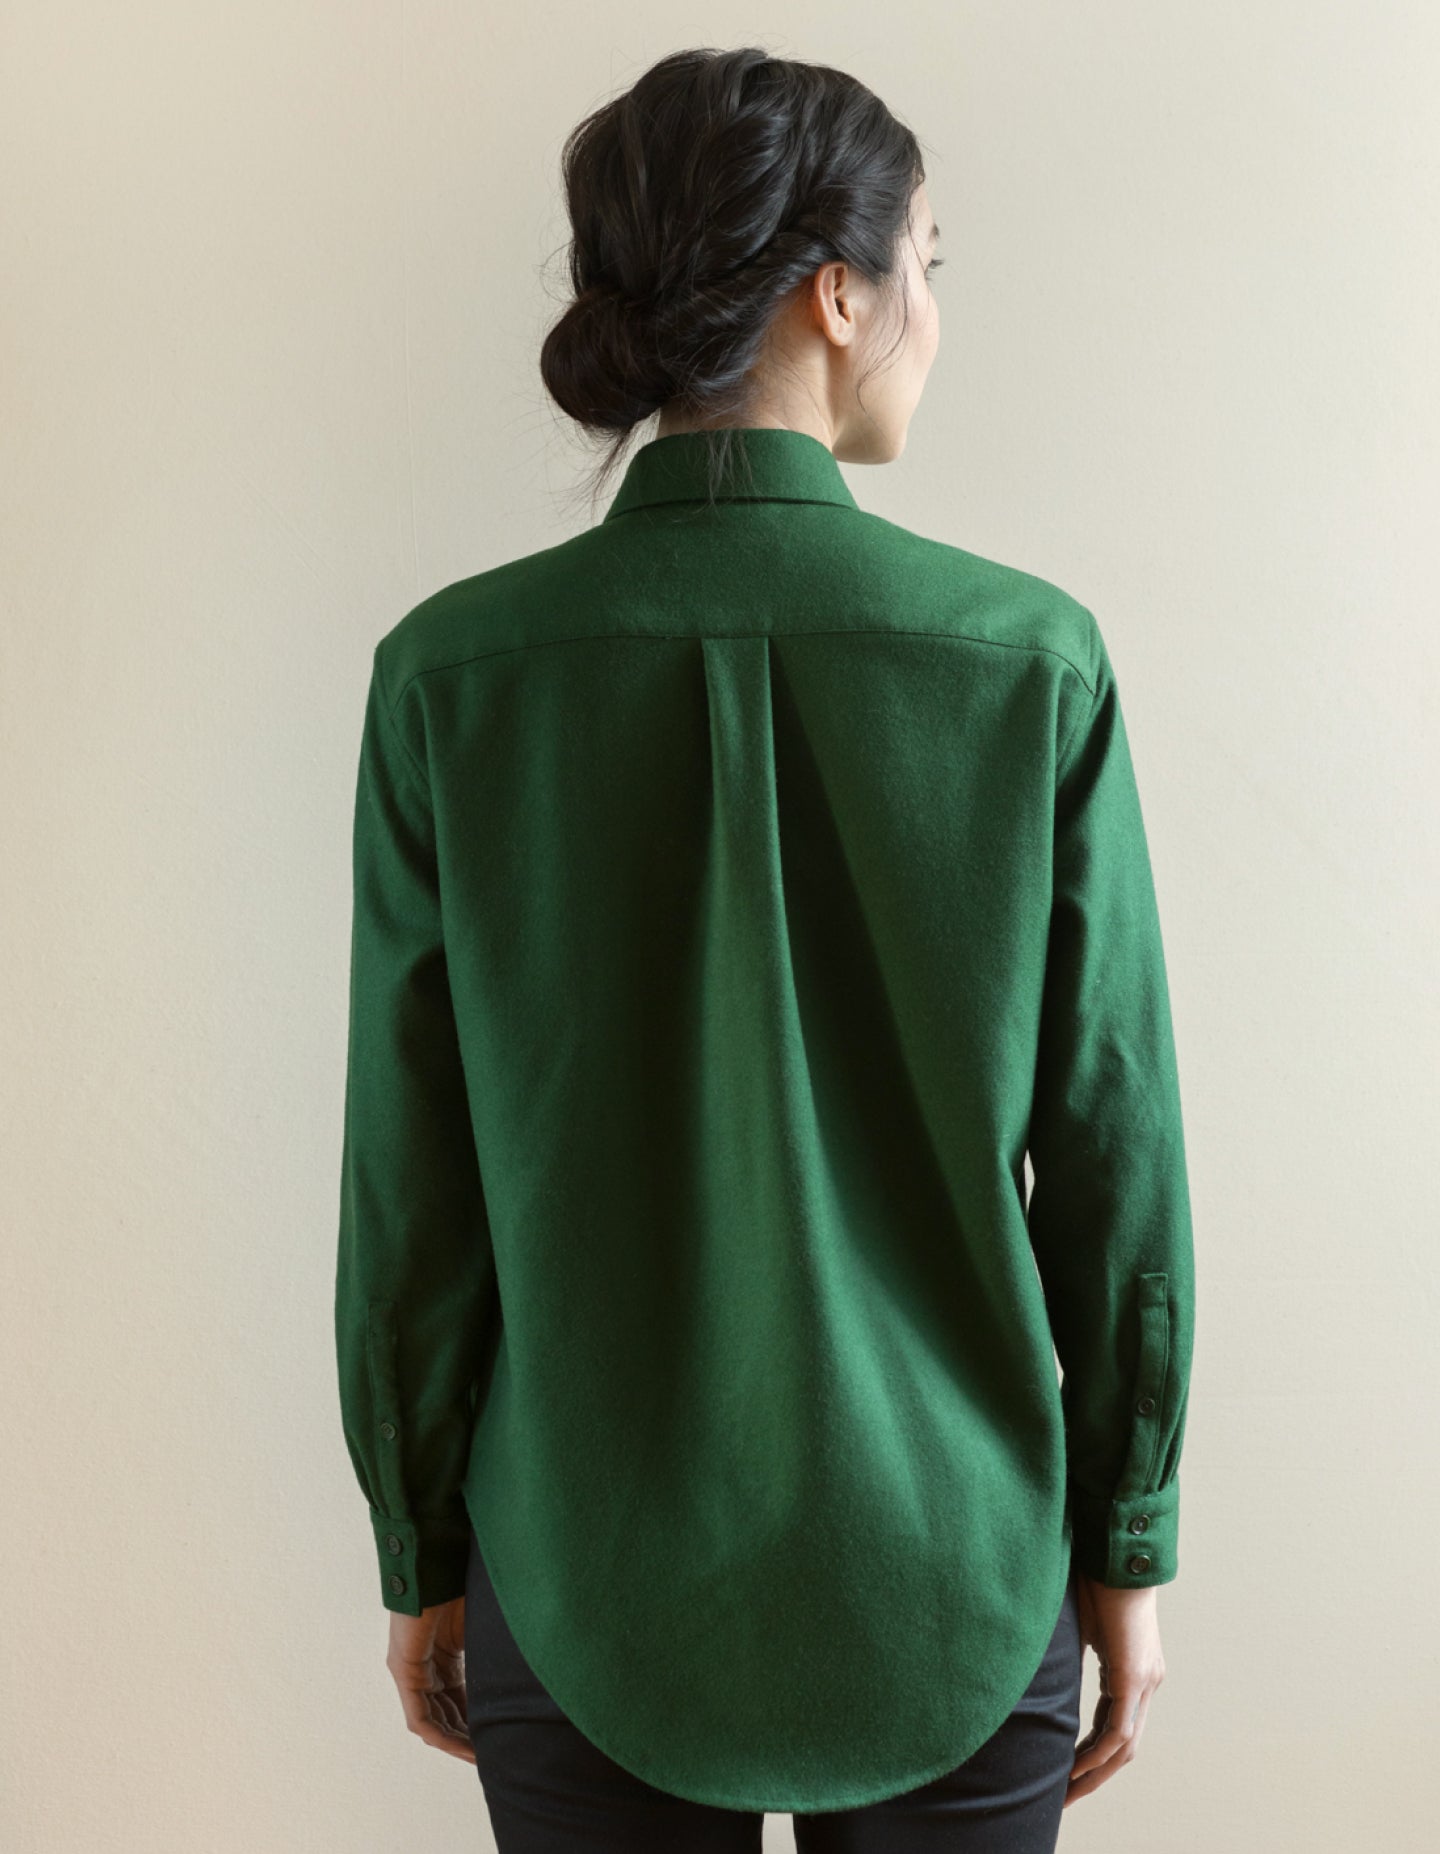 The New Oxford (Exacting Green Merino Wool)